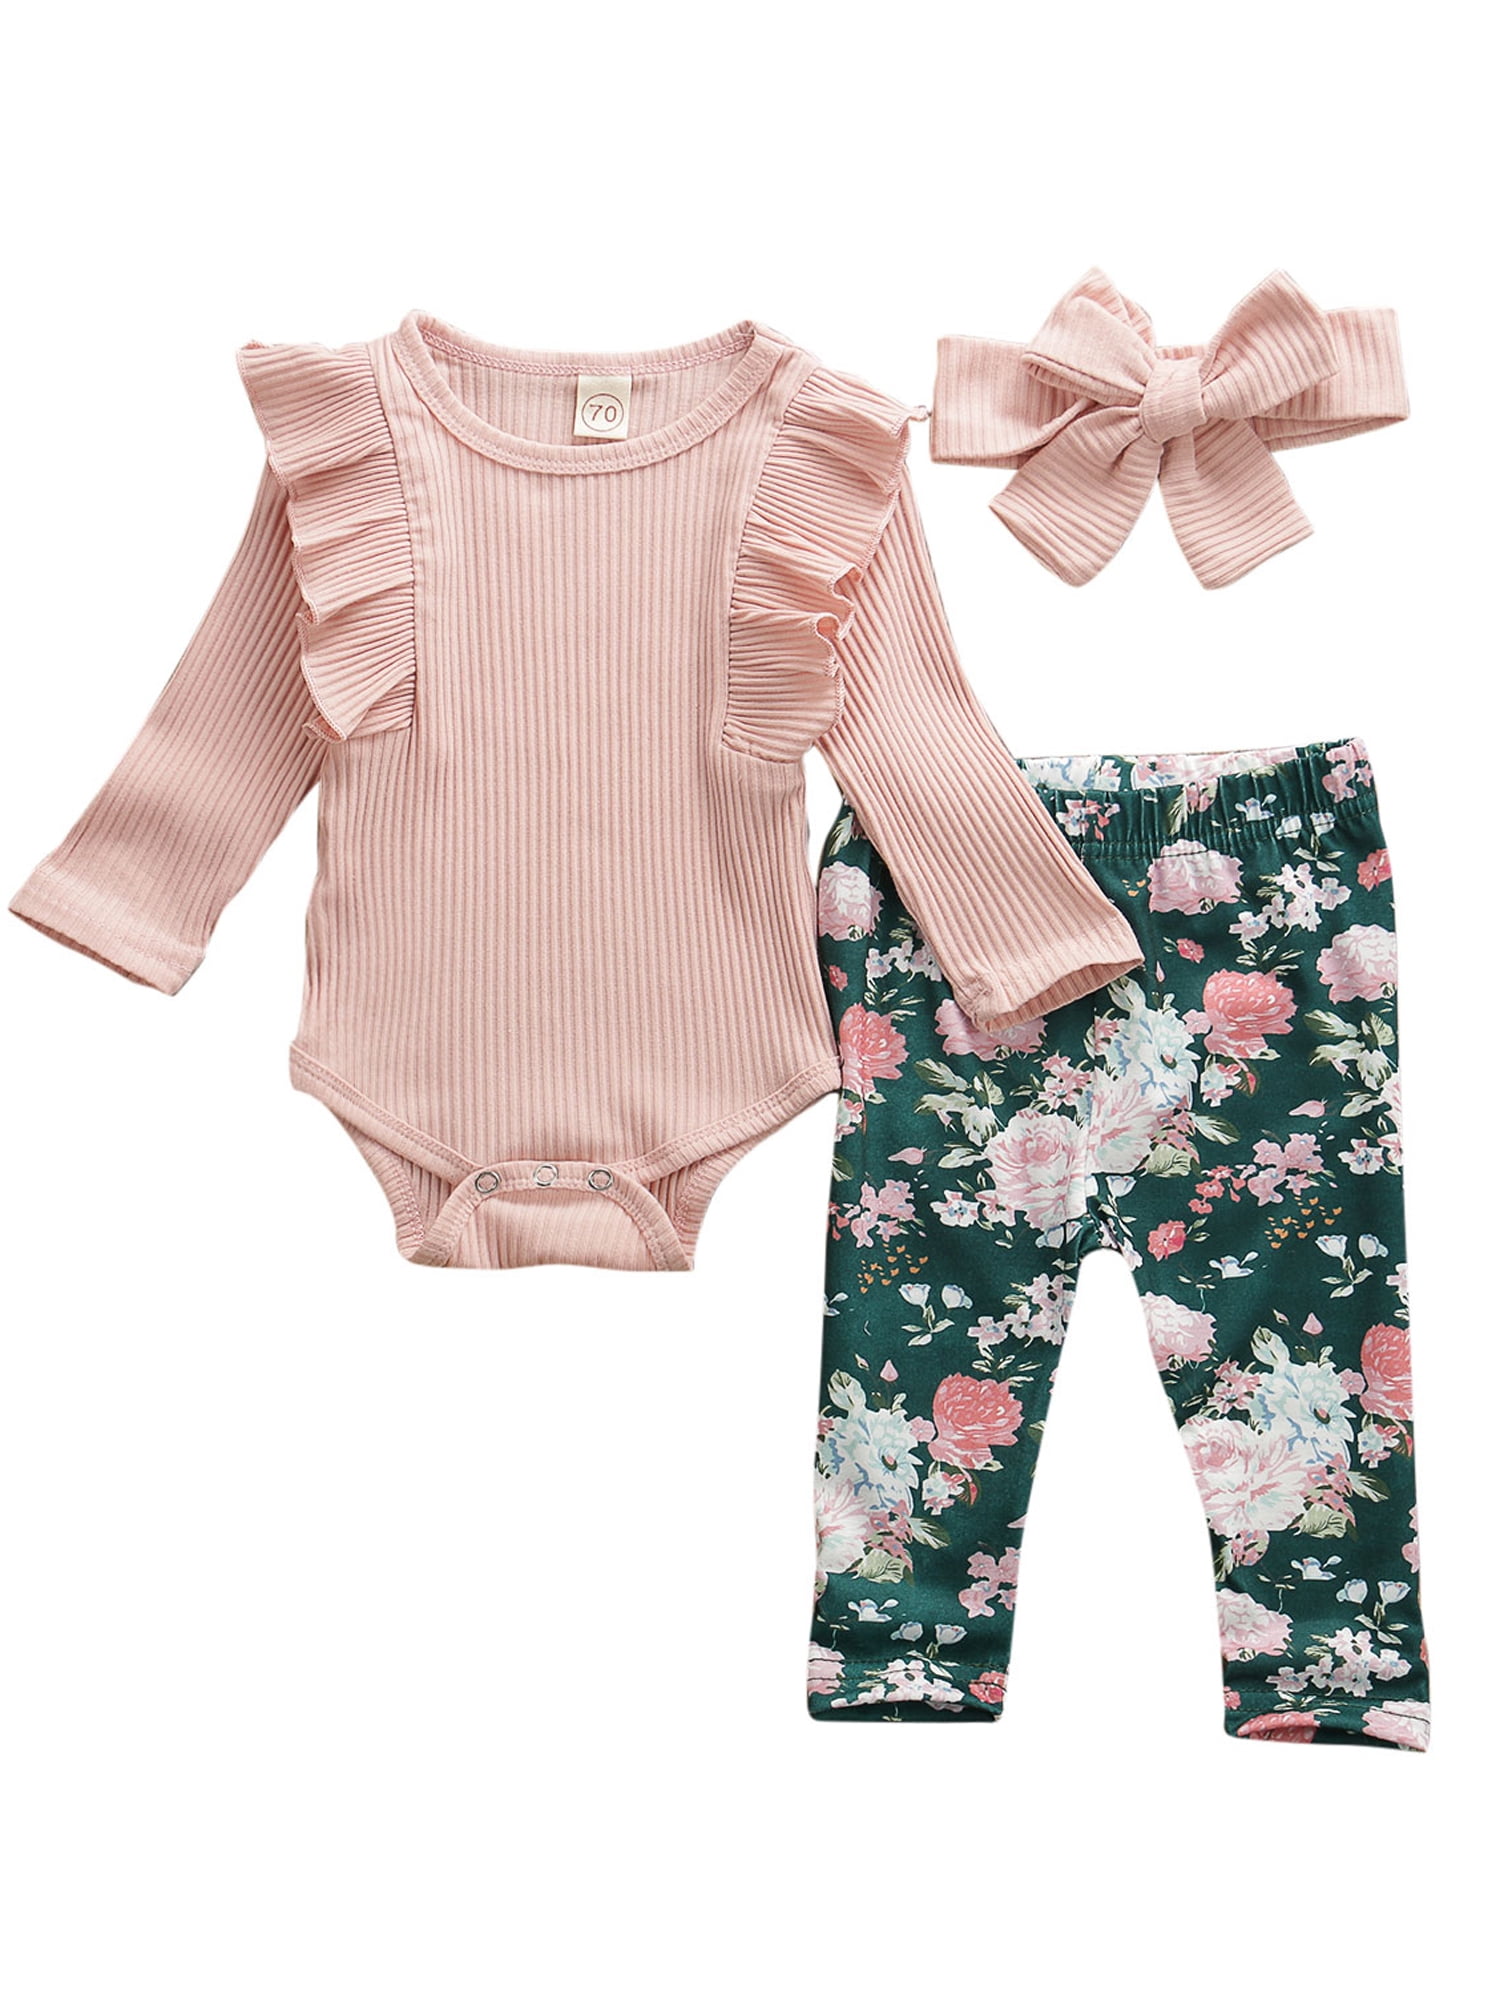 Baby Girls Newborn Ruffle Bowknot Jumpsuit Playsuit Romper Clothes Ropa de Bebe